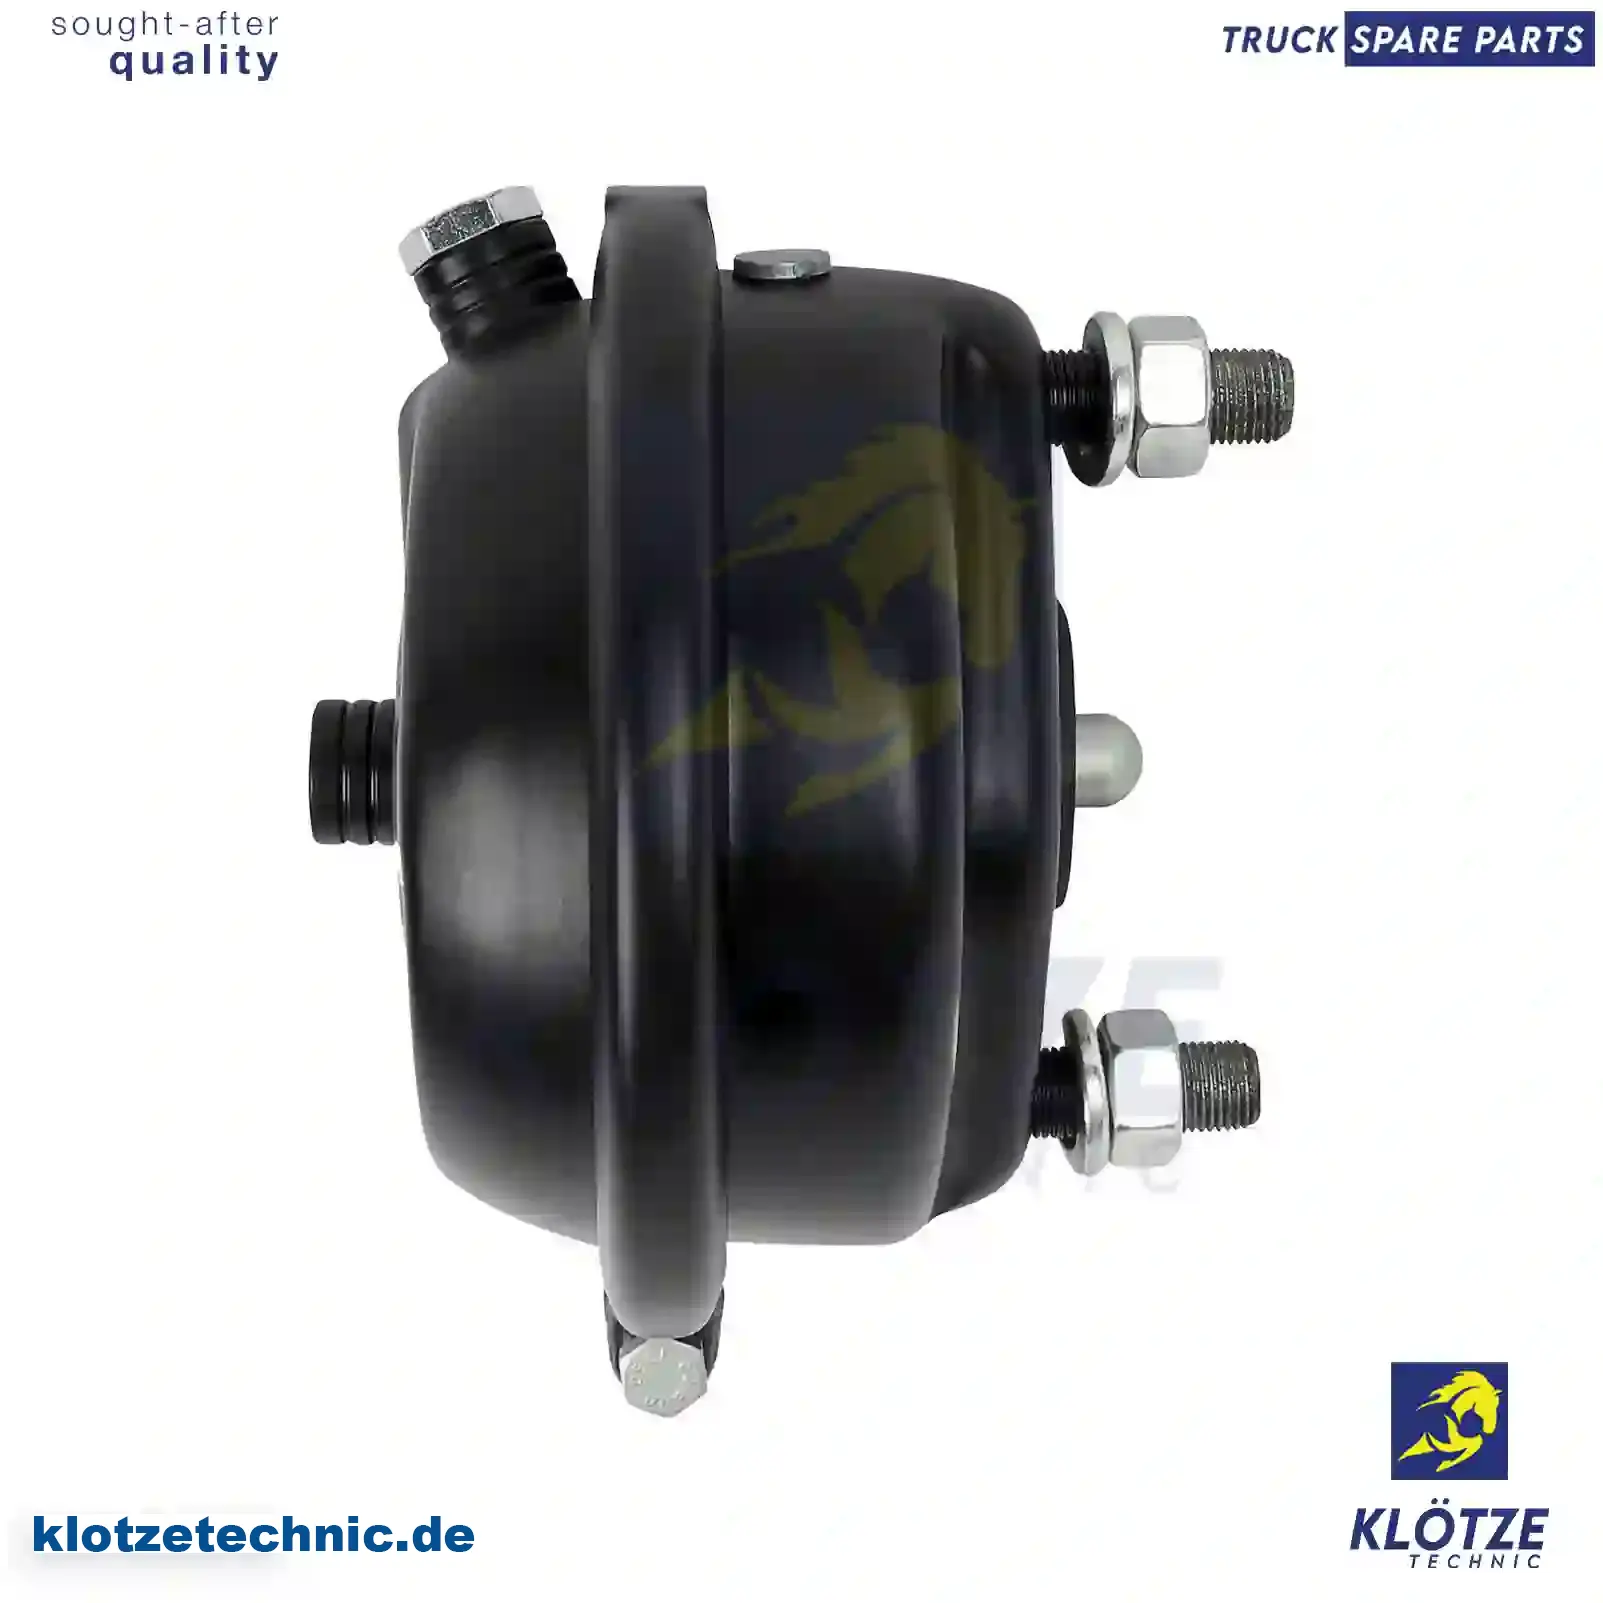 Load sensitive valve, 7401628951, 1628951, || Klötze Technic